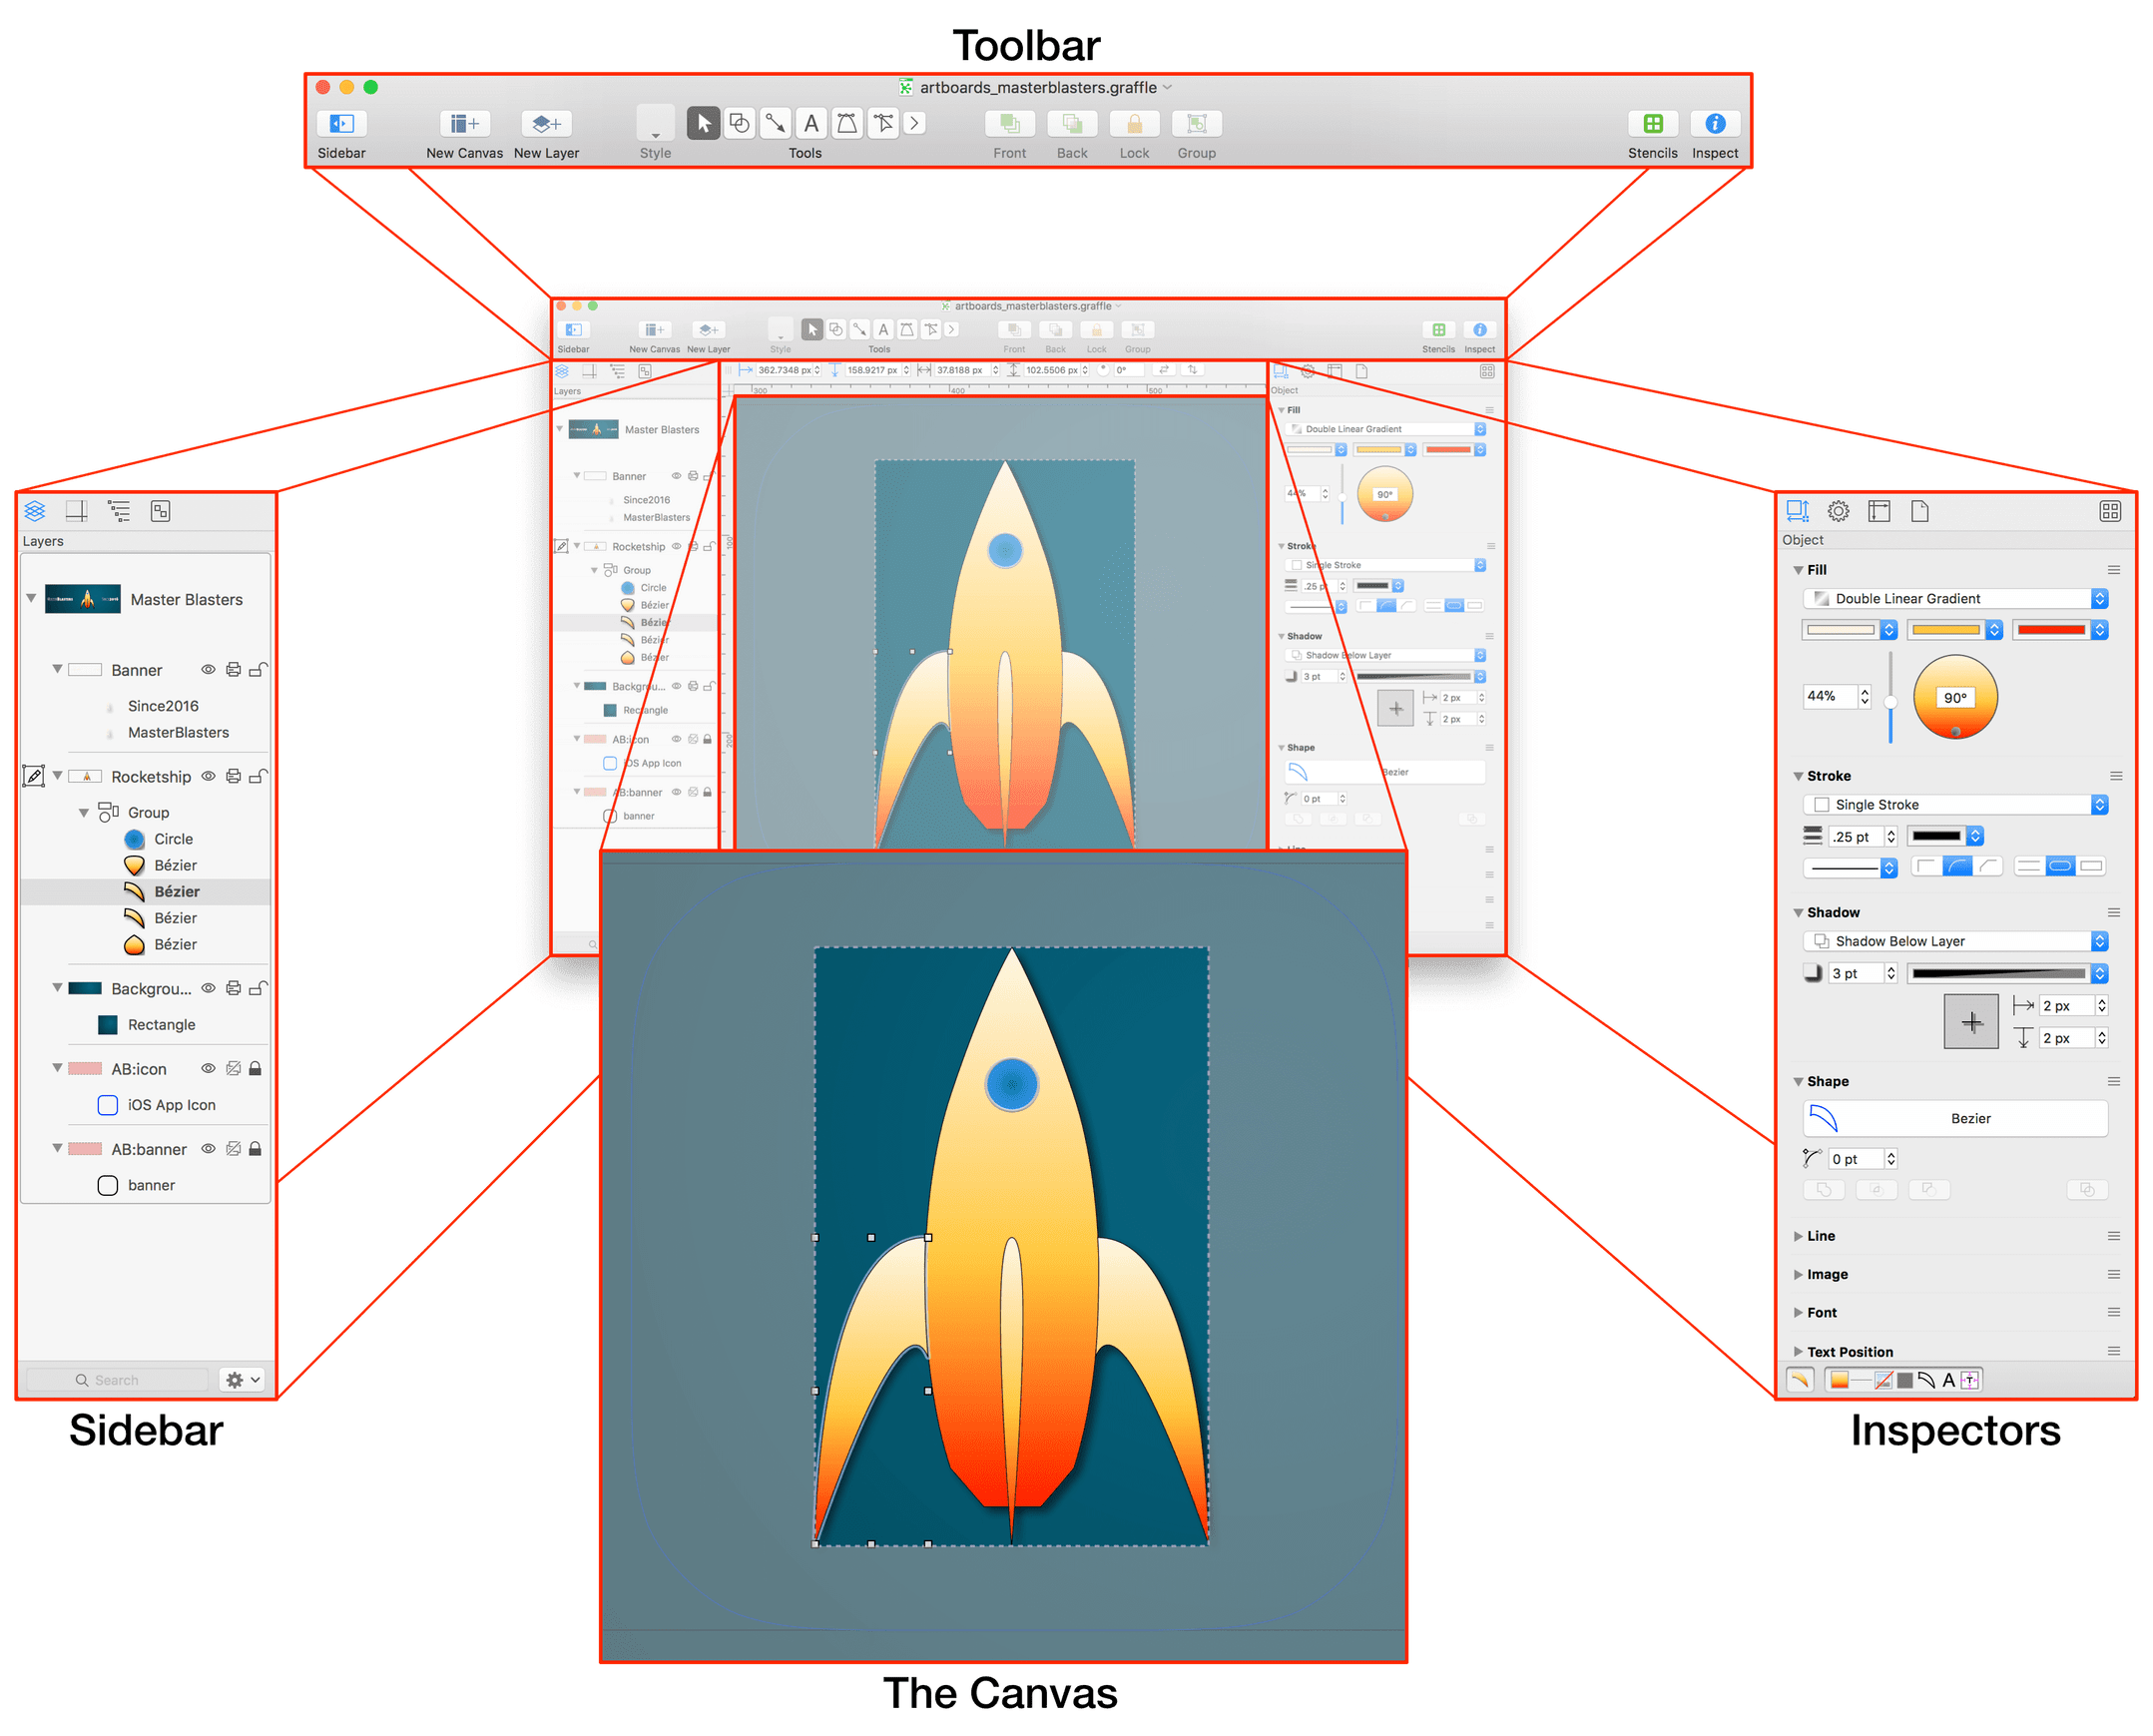 OmniGraffle Pro instal the last version for windows